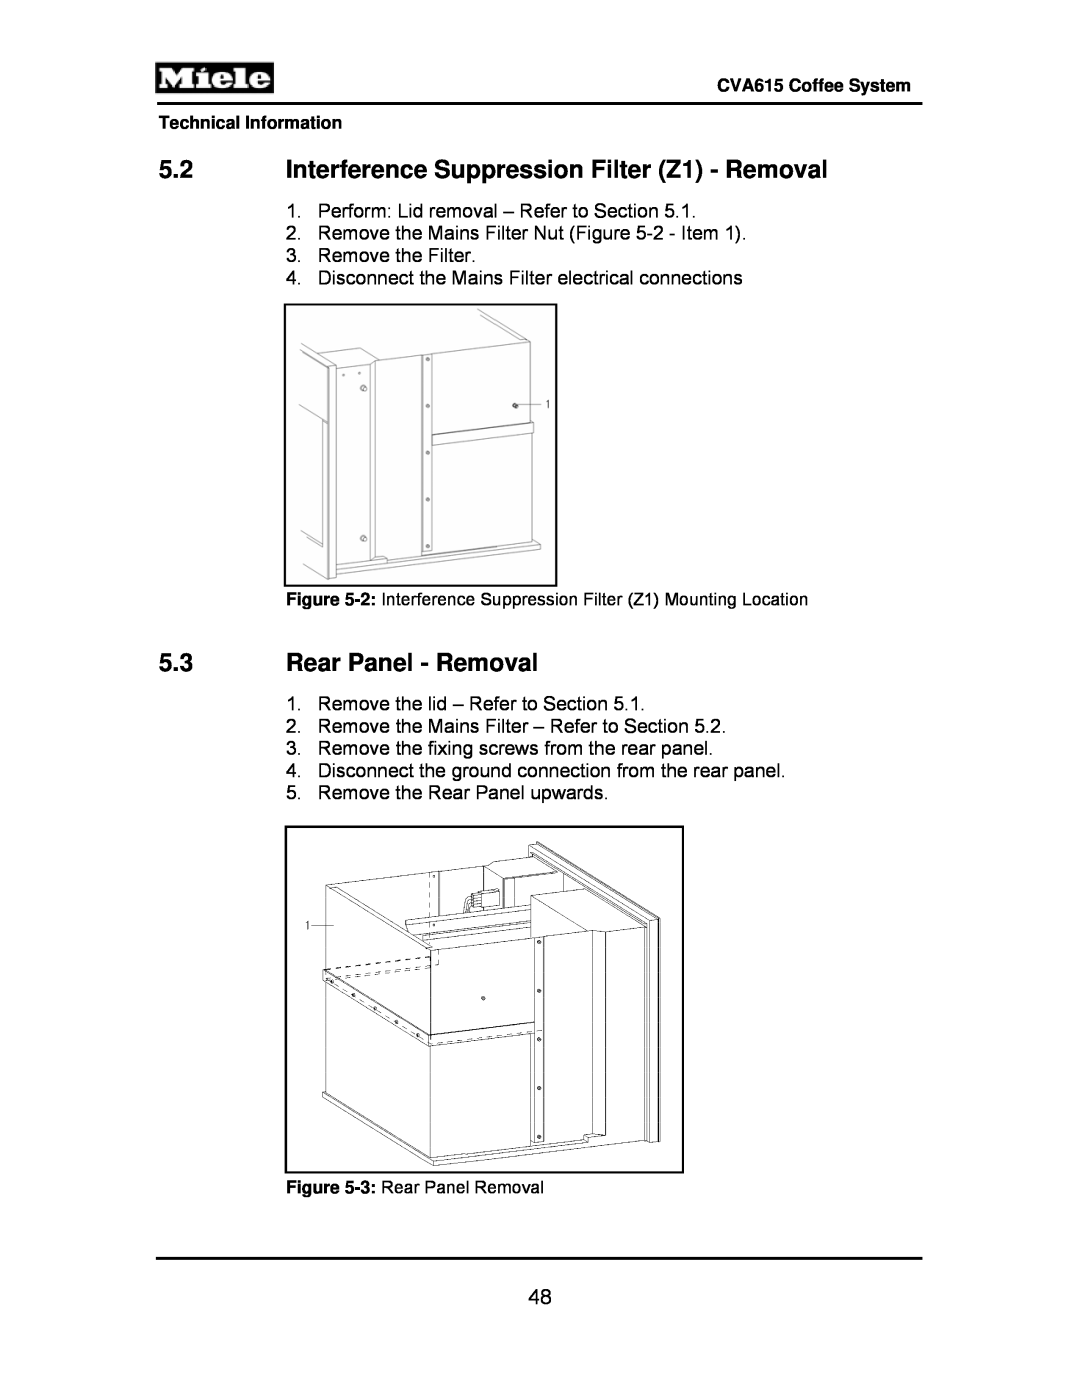 Miele CVA615 manual 5.2Interference Suppression Filter Z1 - Removal, 5.3Rear Panel - Removal 